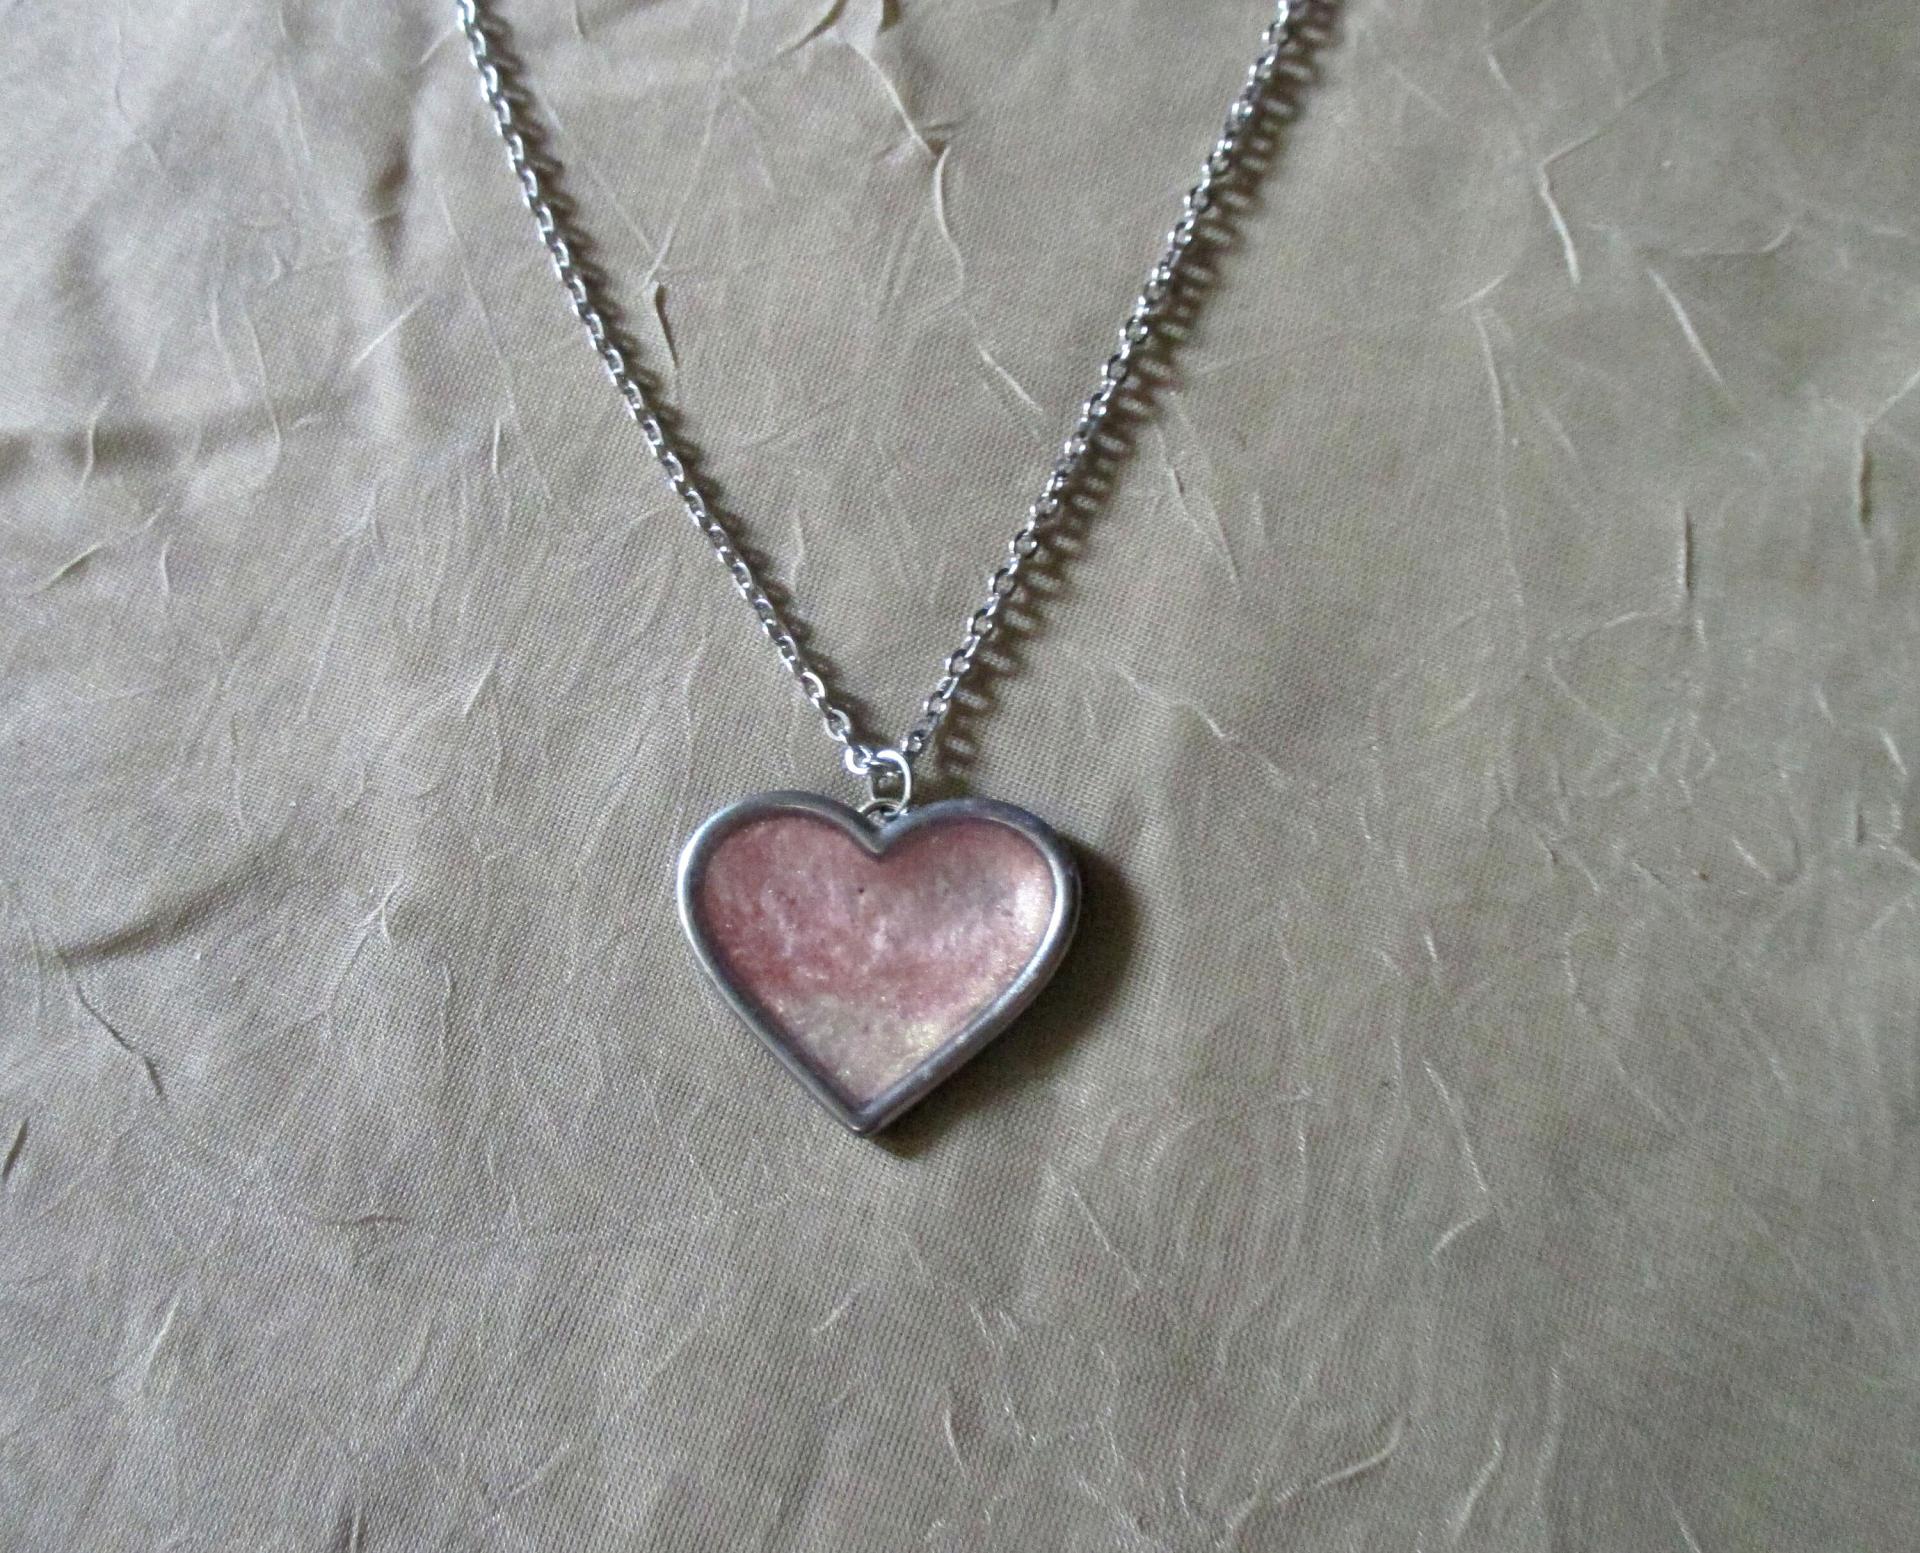 Heart Necklace - Minimalist Jewelery - Resin Jewelry - Handmade Pendant Necklace